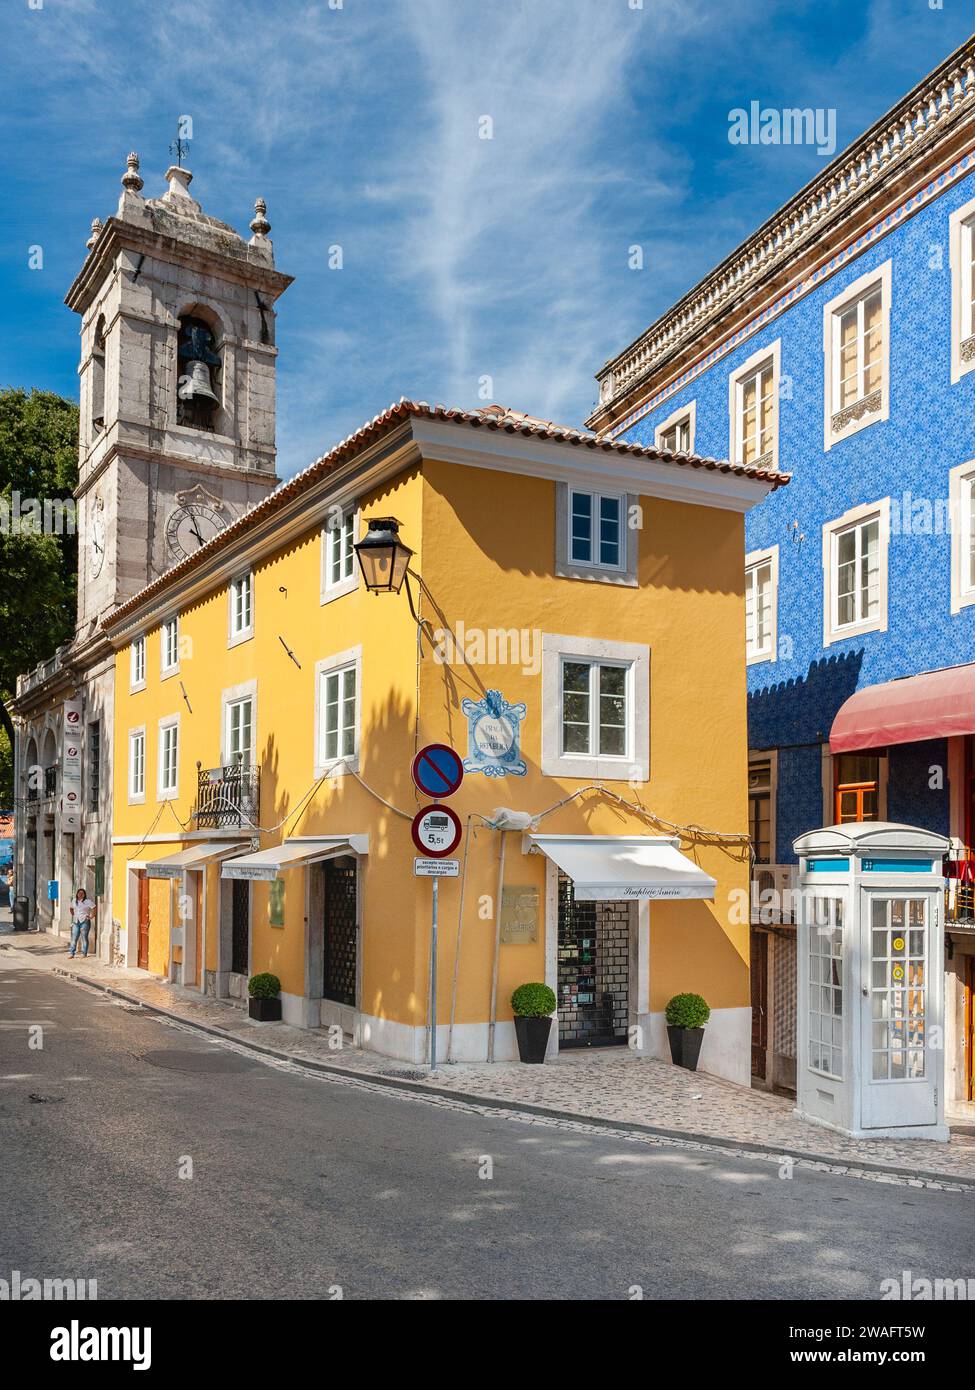 Praca da Republica im Dorf von Sintra in Portugal Stockfoto